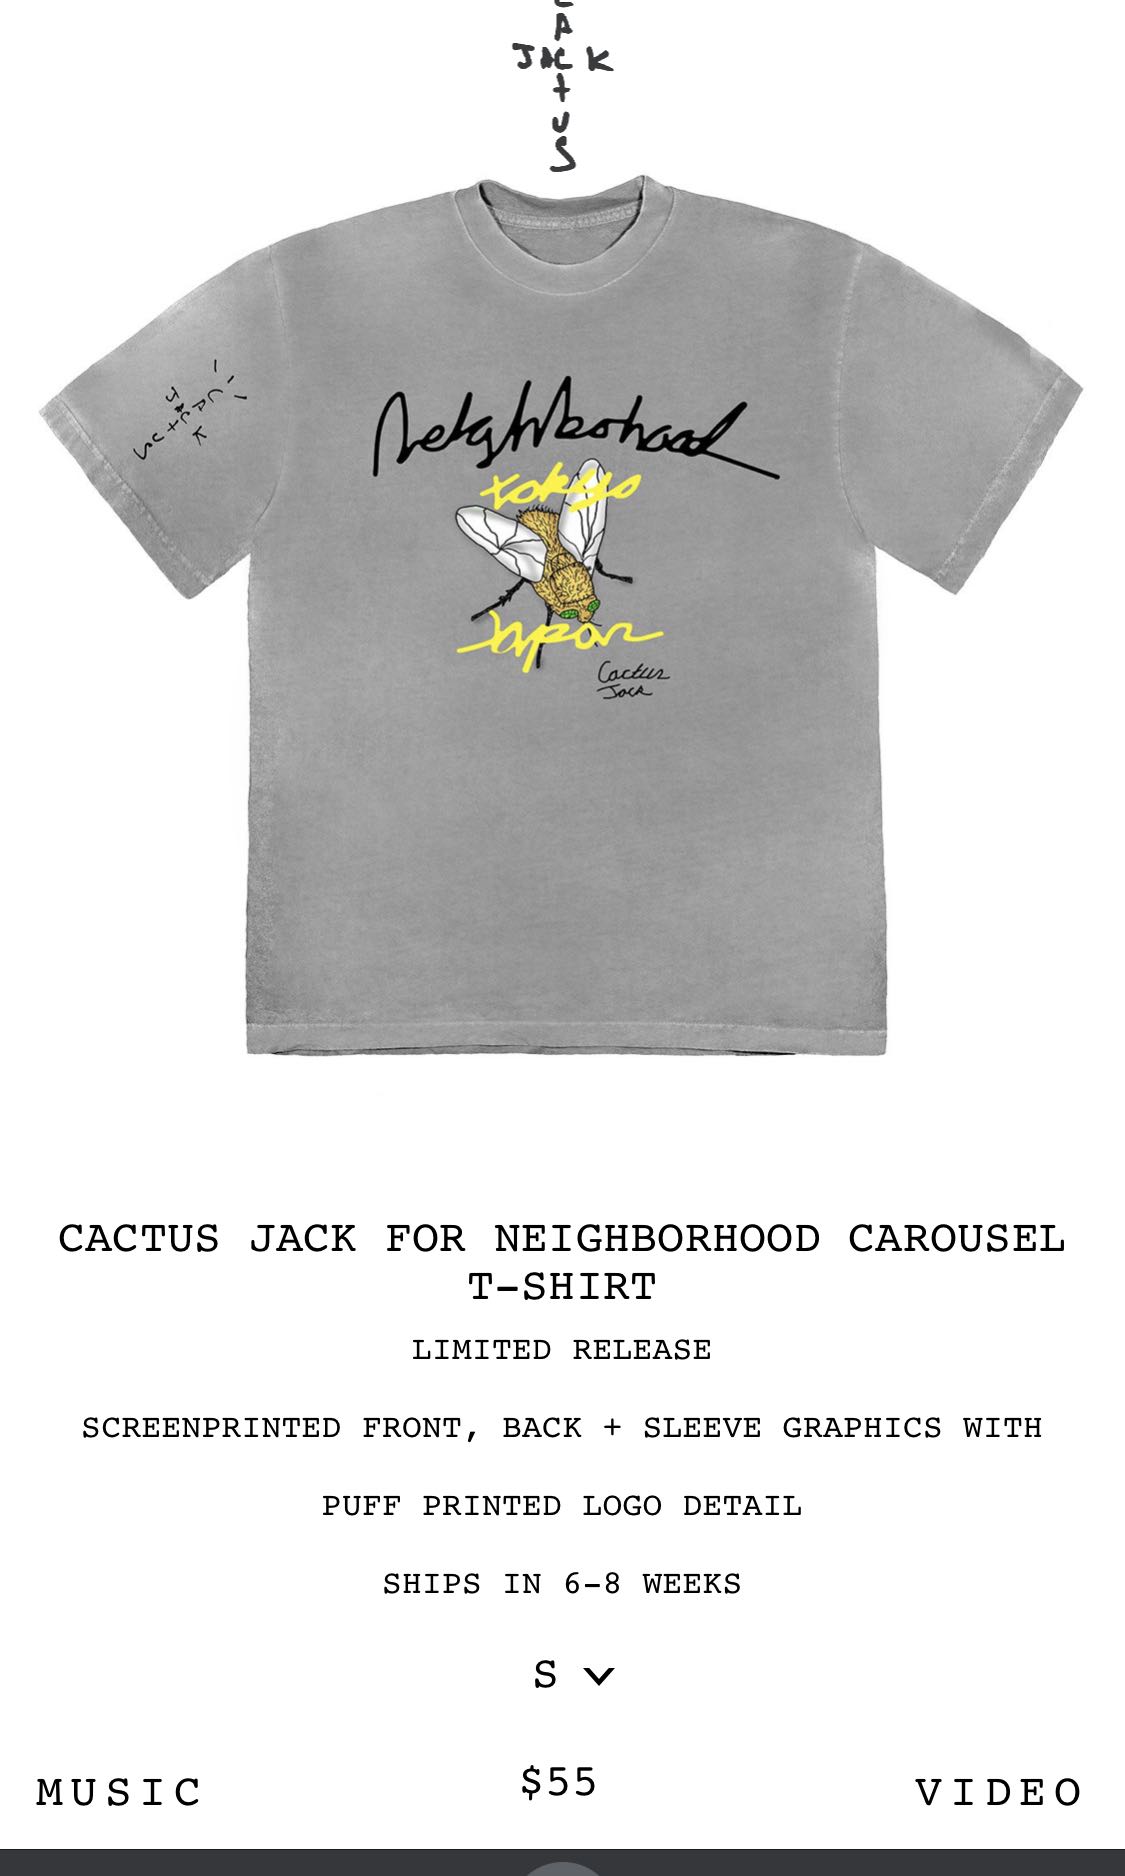 CACTUS JACK FOR NEIGHBORHOOD CAROUSEL